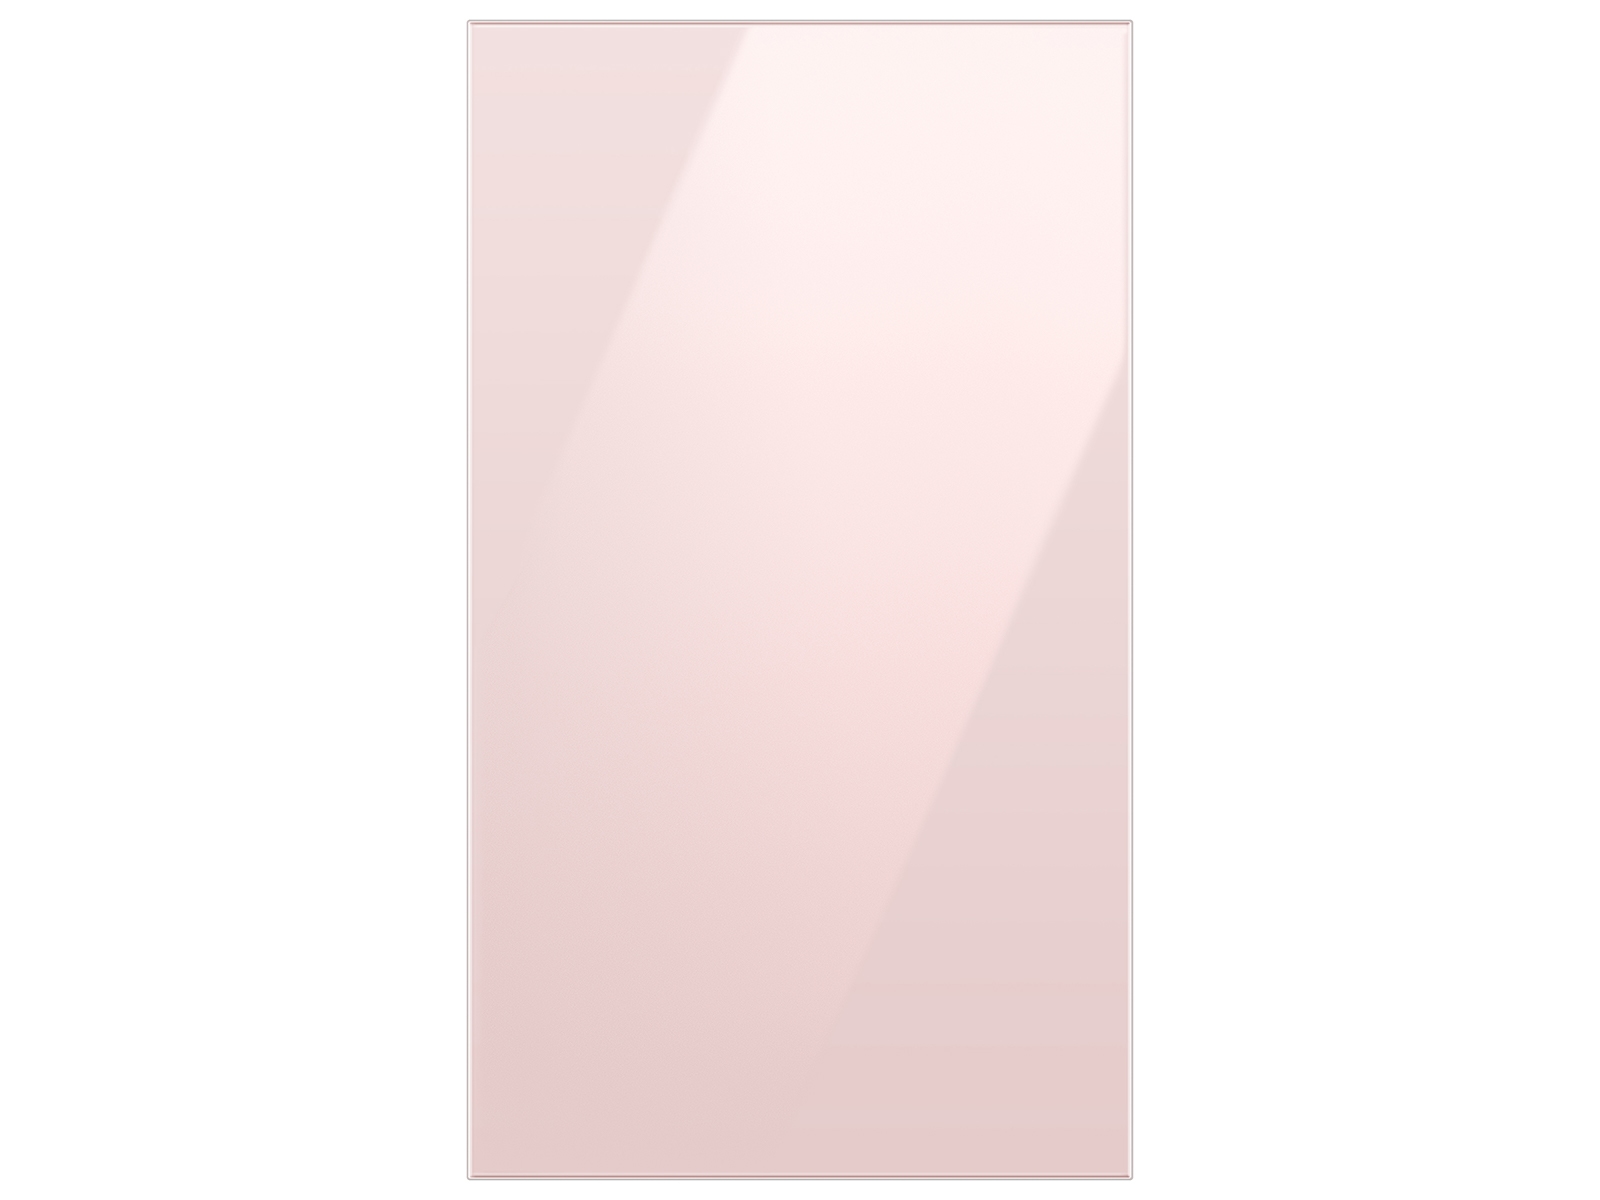 Thumbnail image of Bespoke 4-Door Flex™ Refrigerator Panel in Pink Glass - Bottom Panel